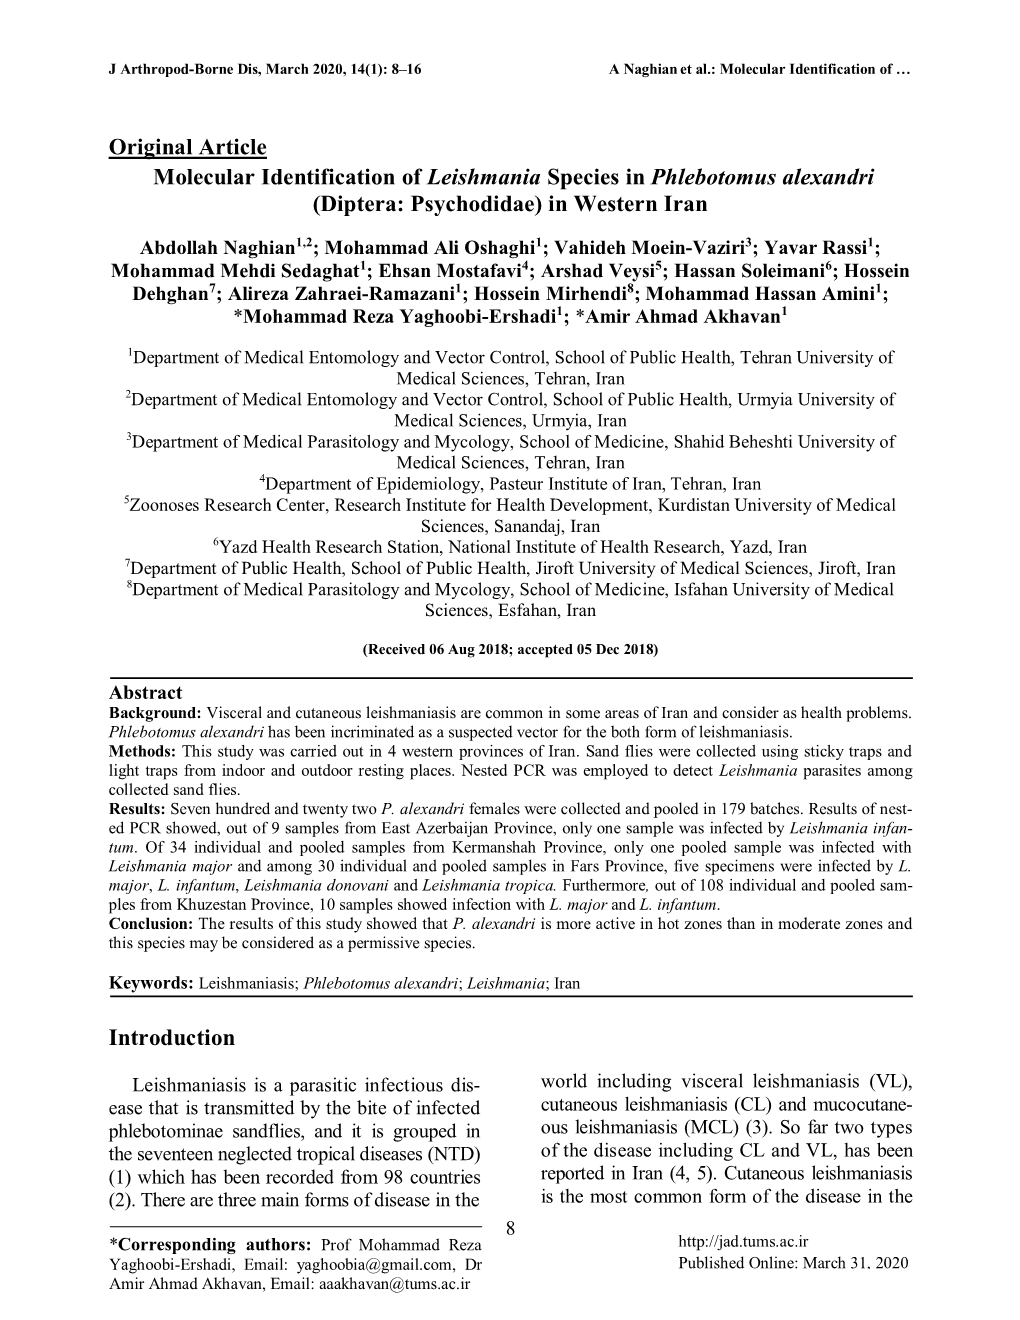 Original Article Molecular Identification of Leishmania Species in Phlebotomus Alexandri (Diptera: Psychodidae) in Western Iran